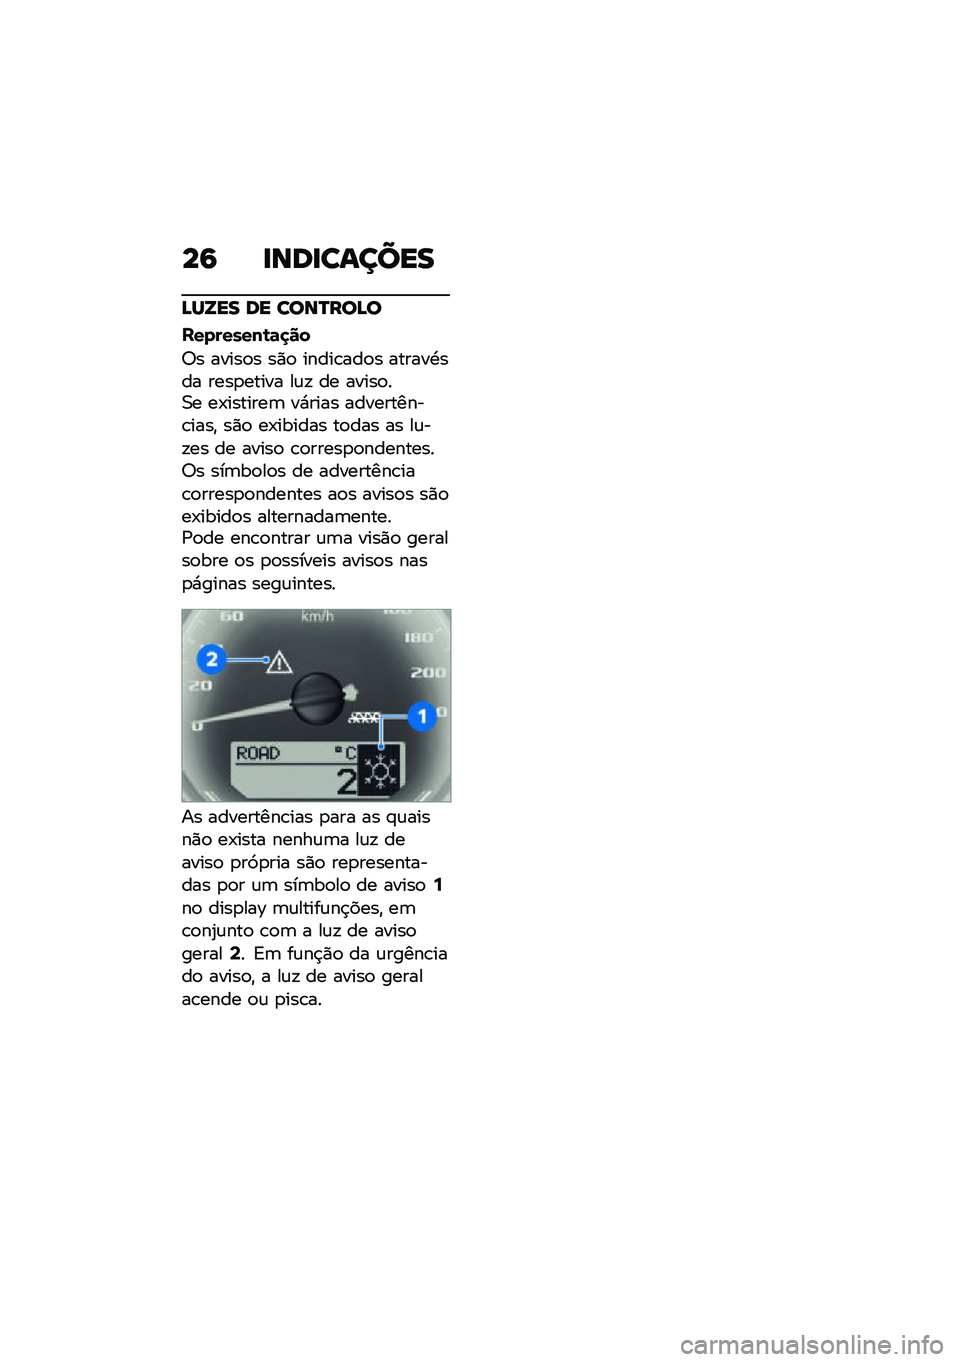 BMW MOTORRAD R NINE T URVAN G/S 2021  Manual do condutor (in Portuguese) ��9 �
���
������
�A��Y�� �� ����P���A�
���������\b�	�
��
�6� �����
� ��)�
 �����\b���
� ������.��� ����
����� ��\f�! �� �����
��0� 